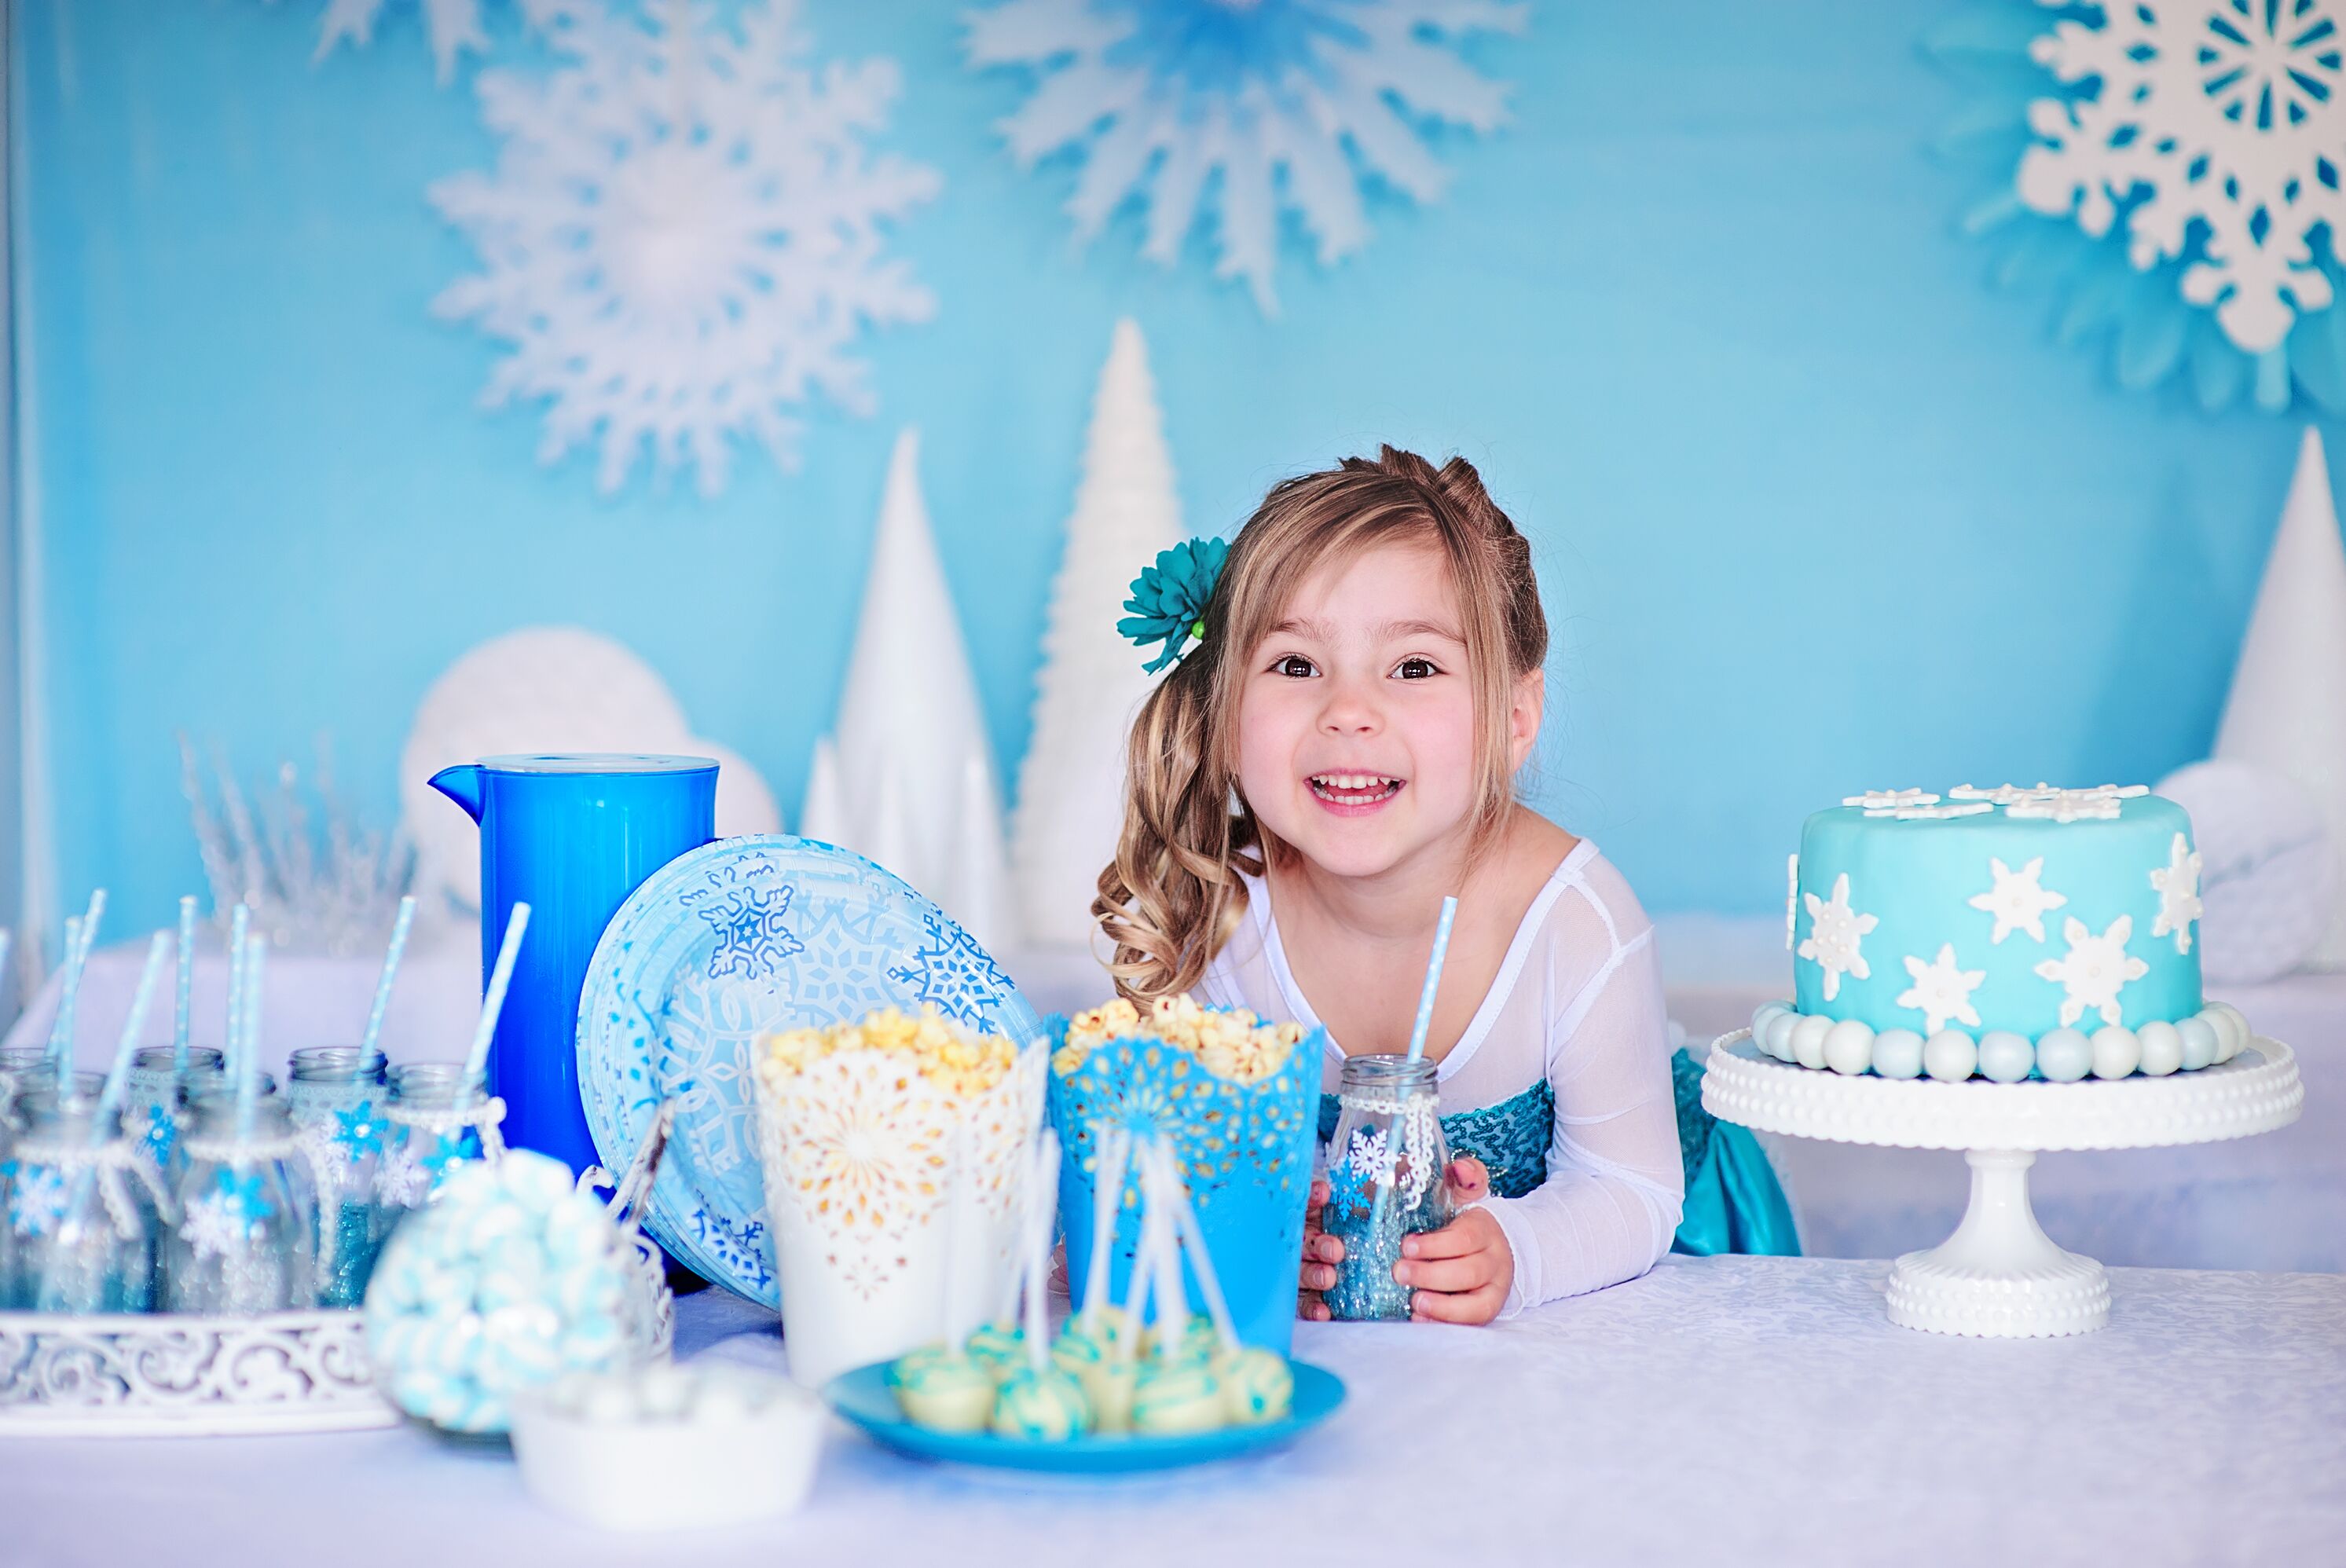 30 Frozen Party Ideas  Frozen birthday party decorations, Frozen